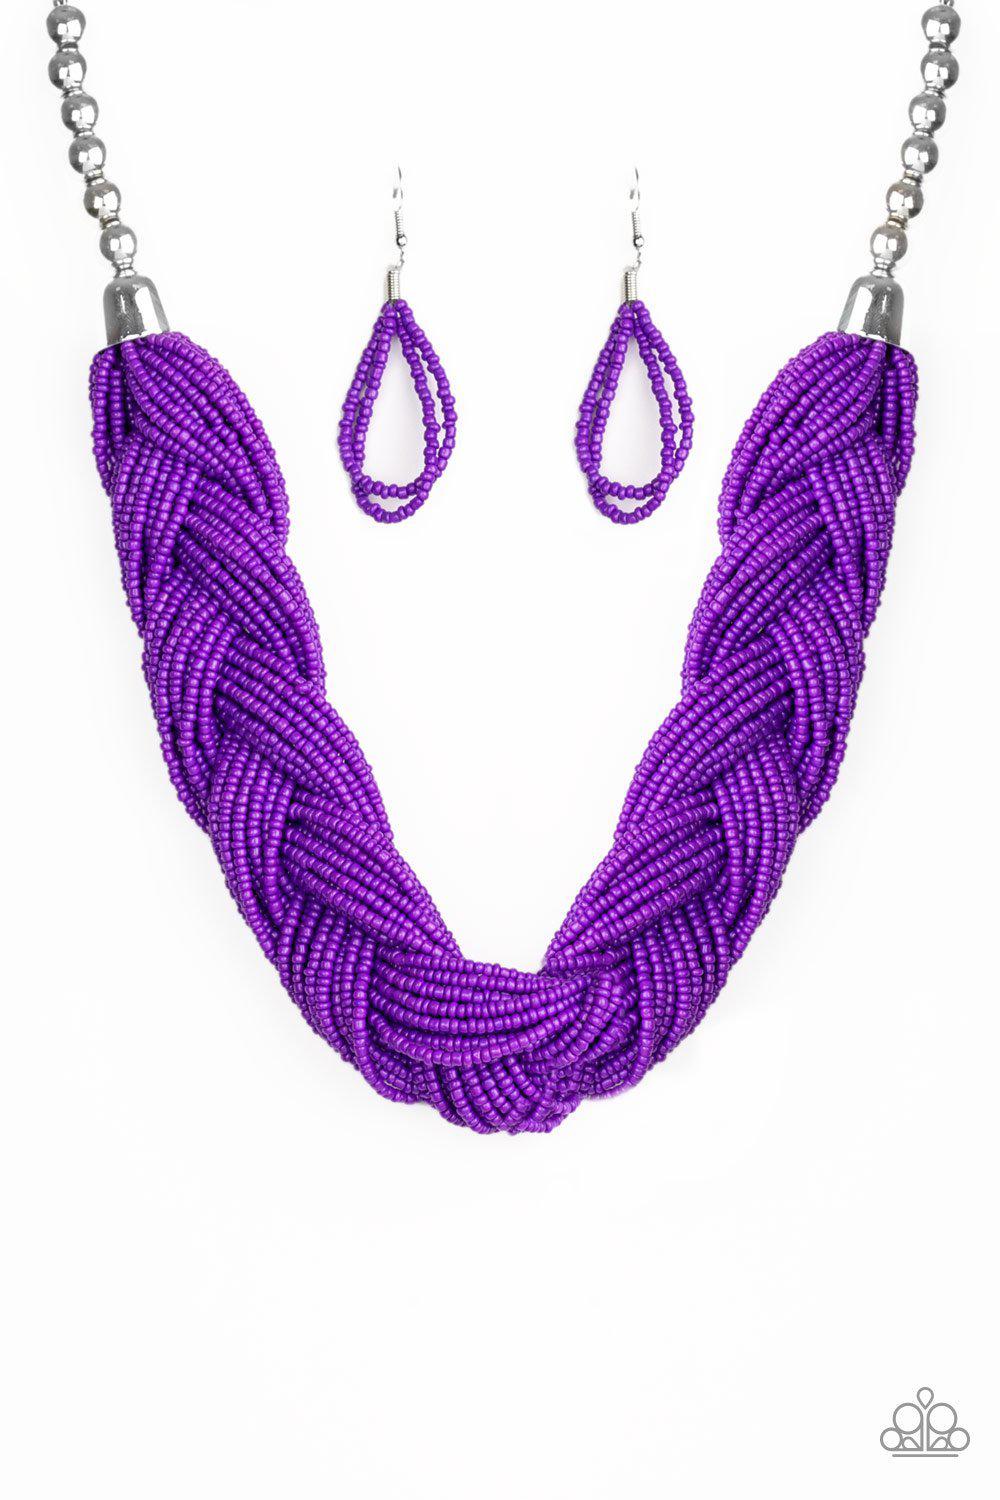 Buy Blue & Purple Beaded Necklace online from Karat Cart